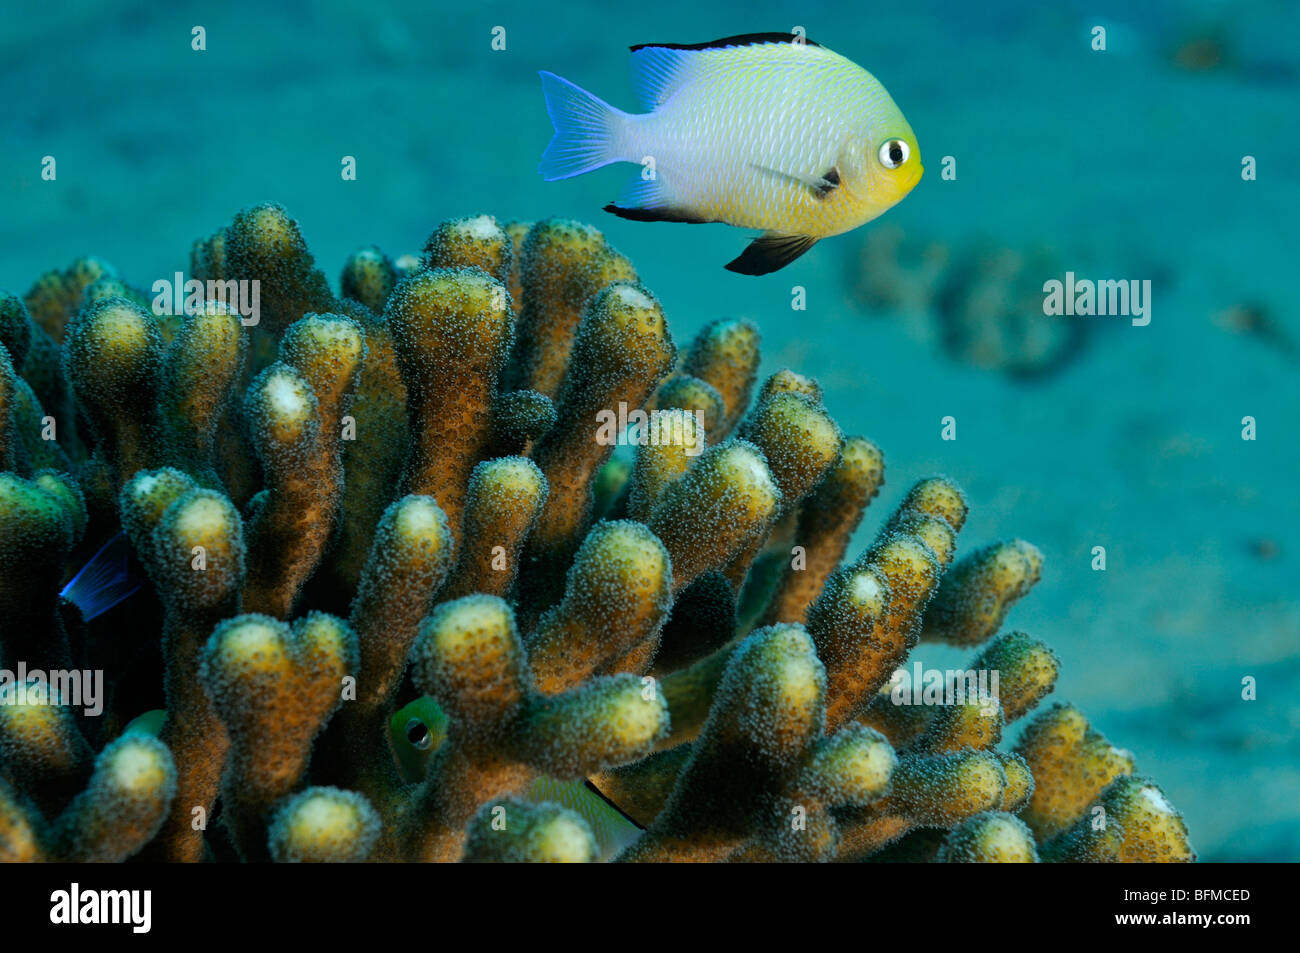 Red Sea Dascyllus fish, Dascyllus marginatus, swimming above hard coral Porites solida, 'Red Sea' Stock Photo